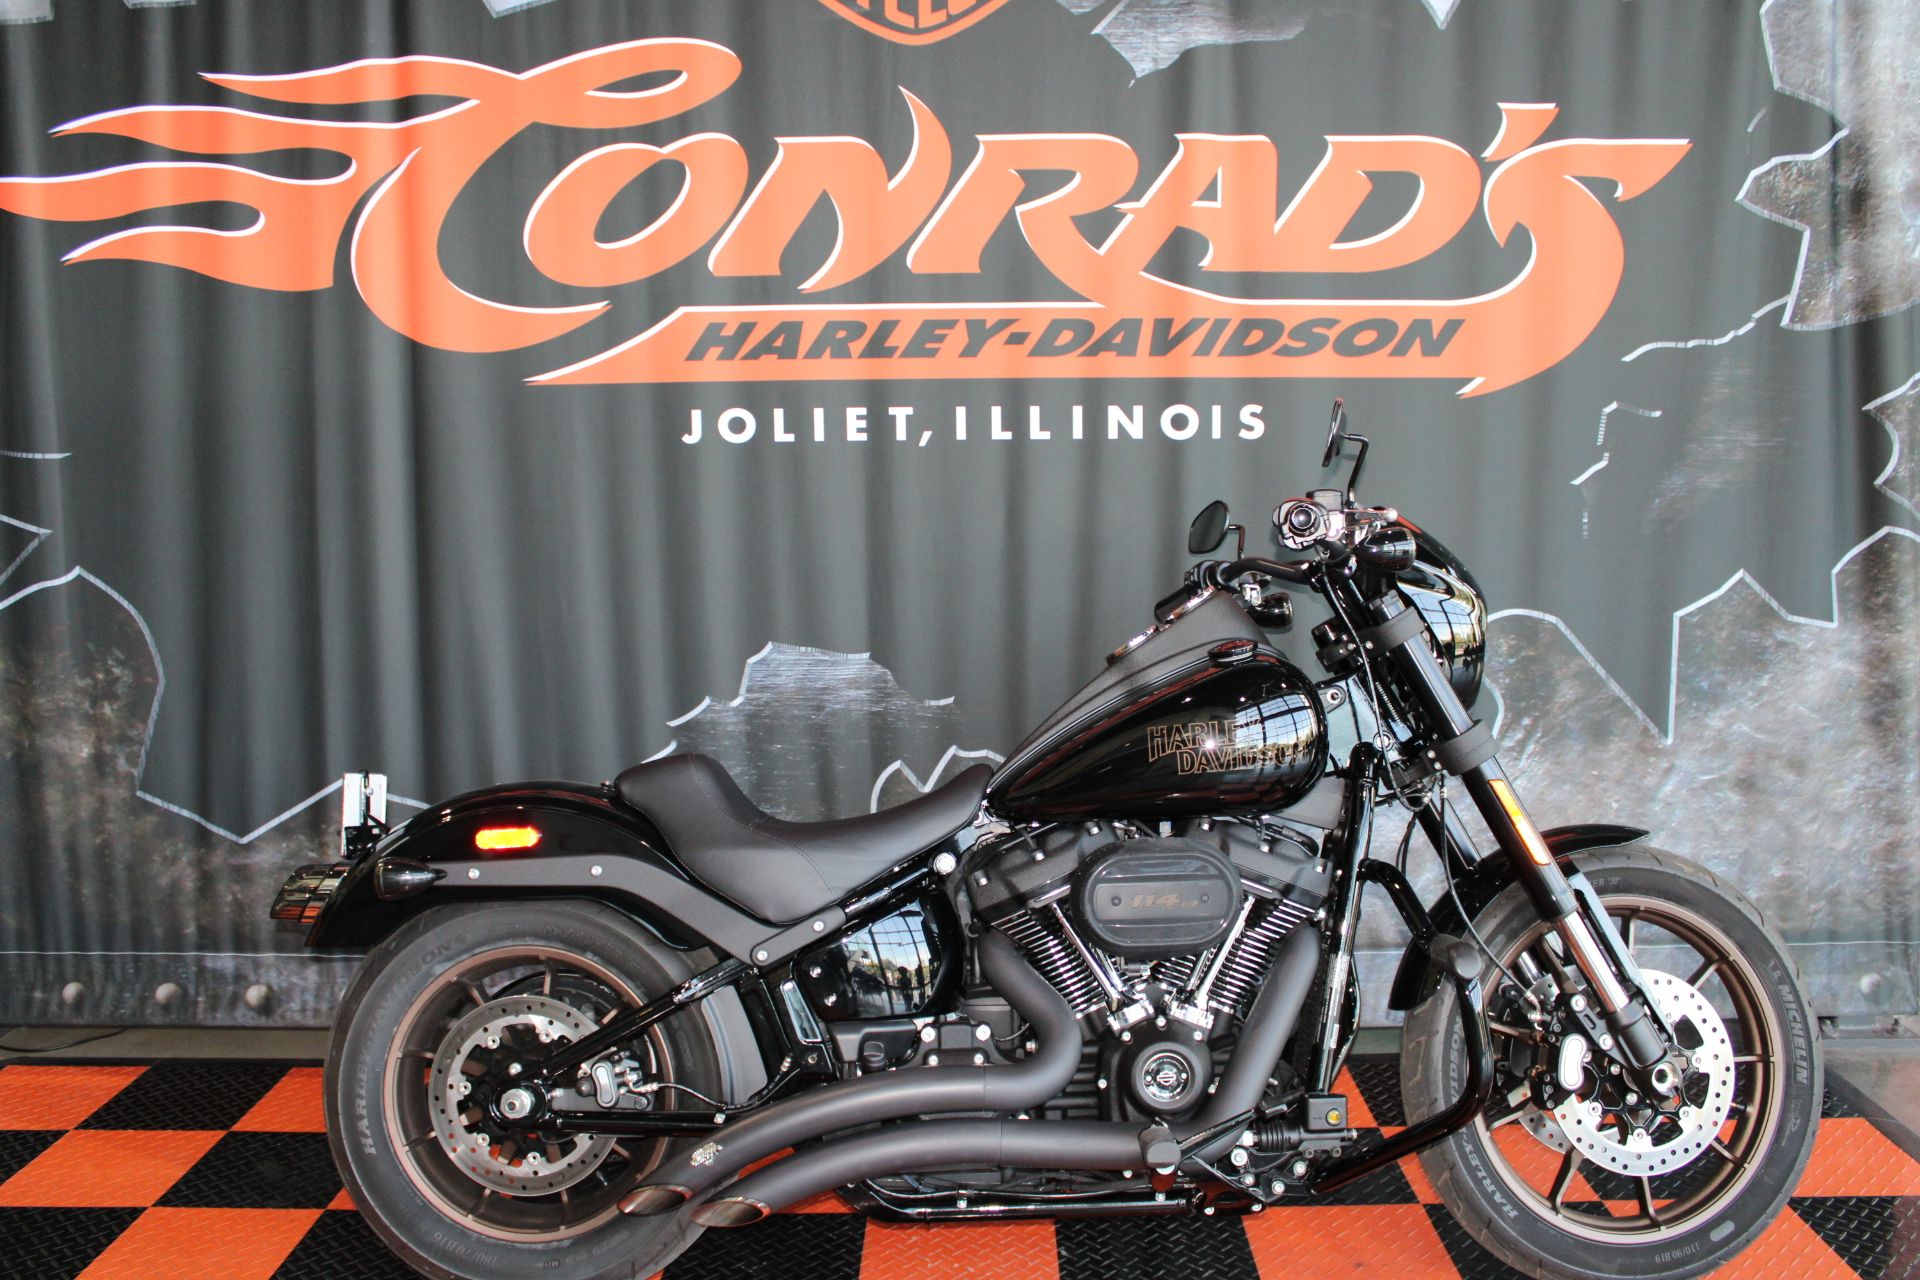 2021 Harley-Davidson Low Rider®S in Shorewood, Illinois - Photo 1